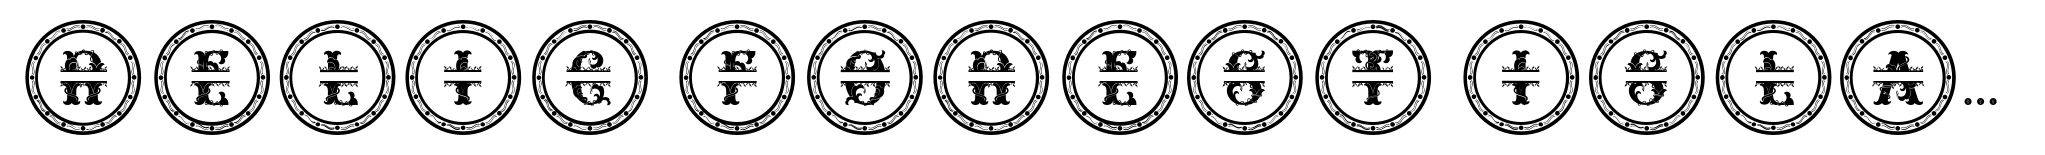 Relic Forest Island 3 Monogram circle image